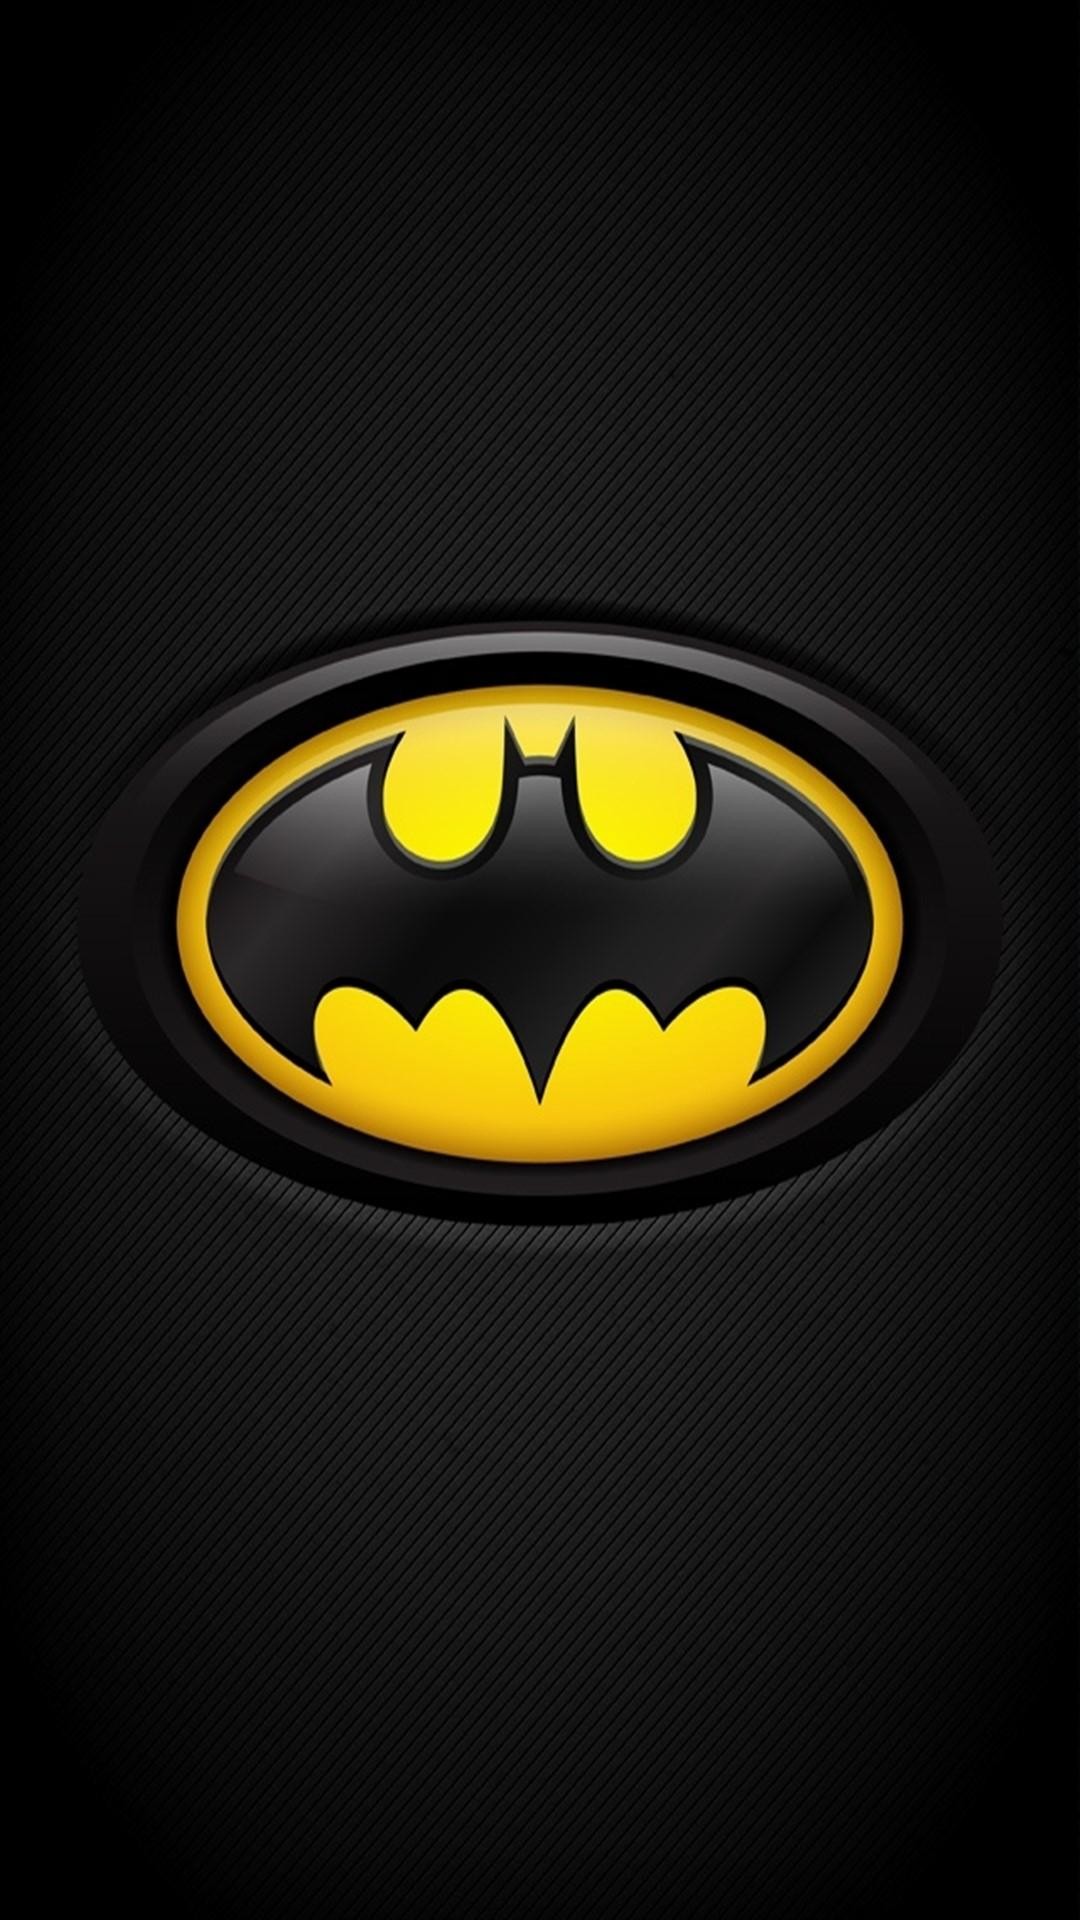 1080x1920 As-melhores-ideias-sobre-Batman-Iphone-no-Pinterest-